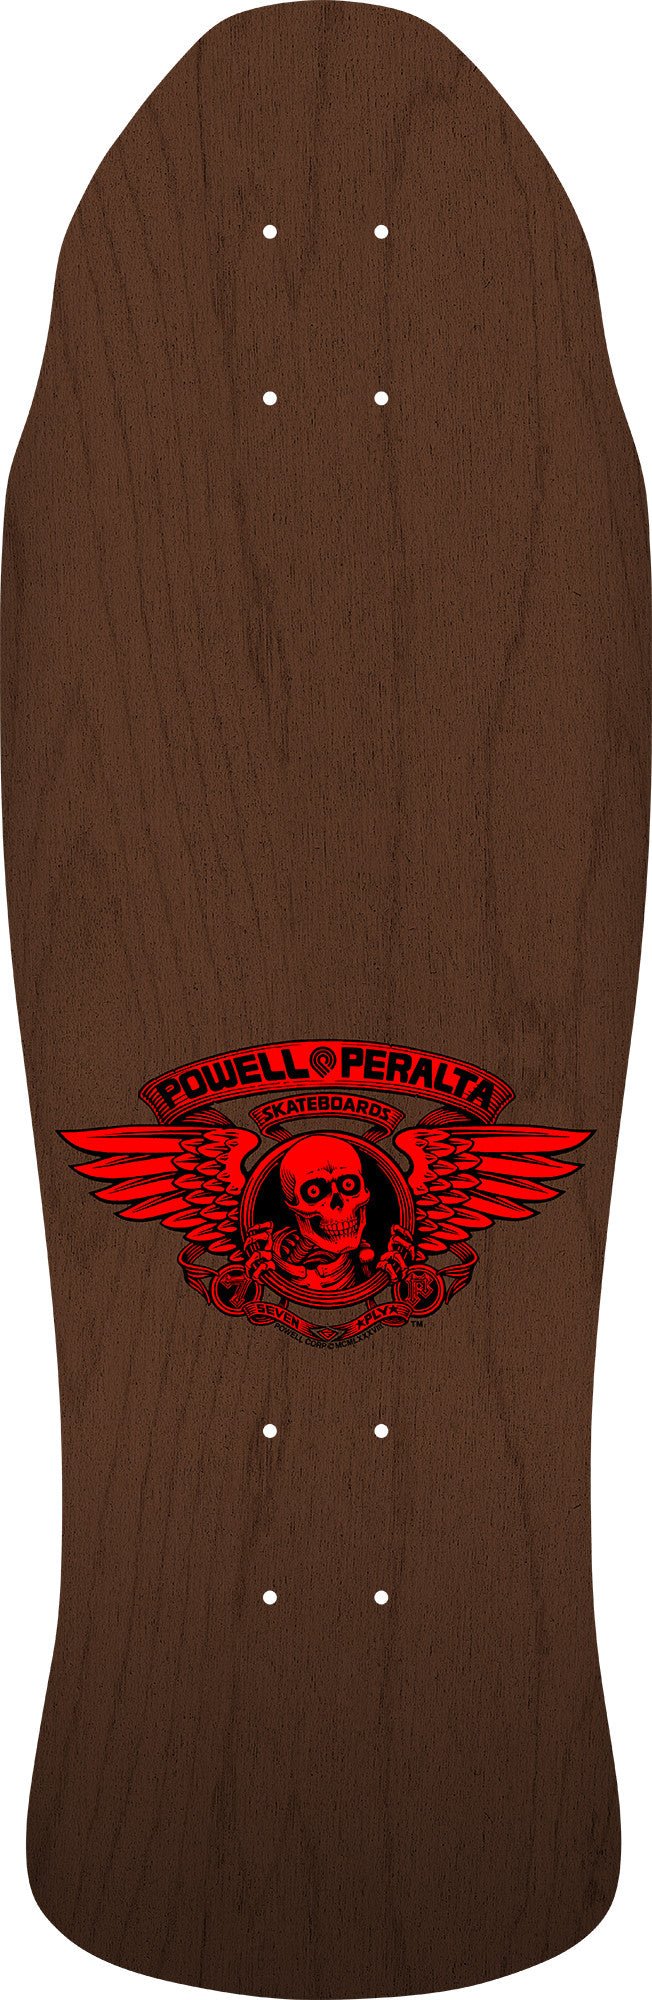 Powell Peralta Steve Caballero Street Reissue Skateboard Deck Red/Brown - 9.625 x 29.75 - Soul Performance Surf & Skate - Powell Peralta